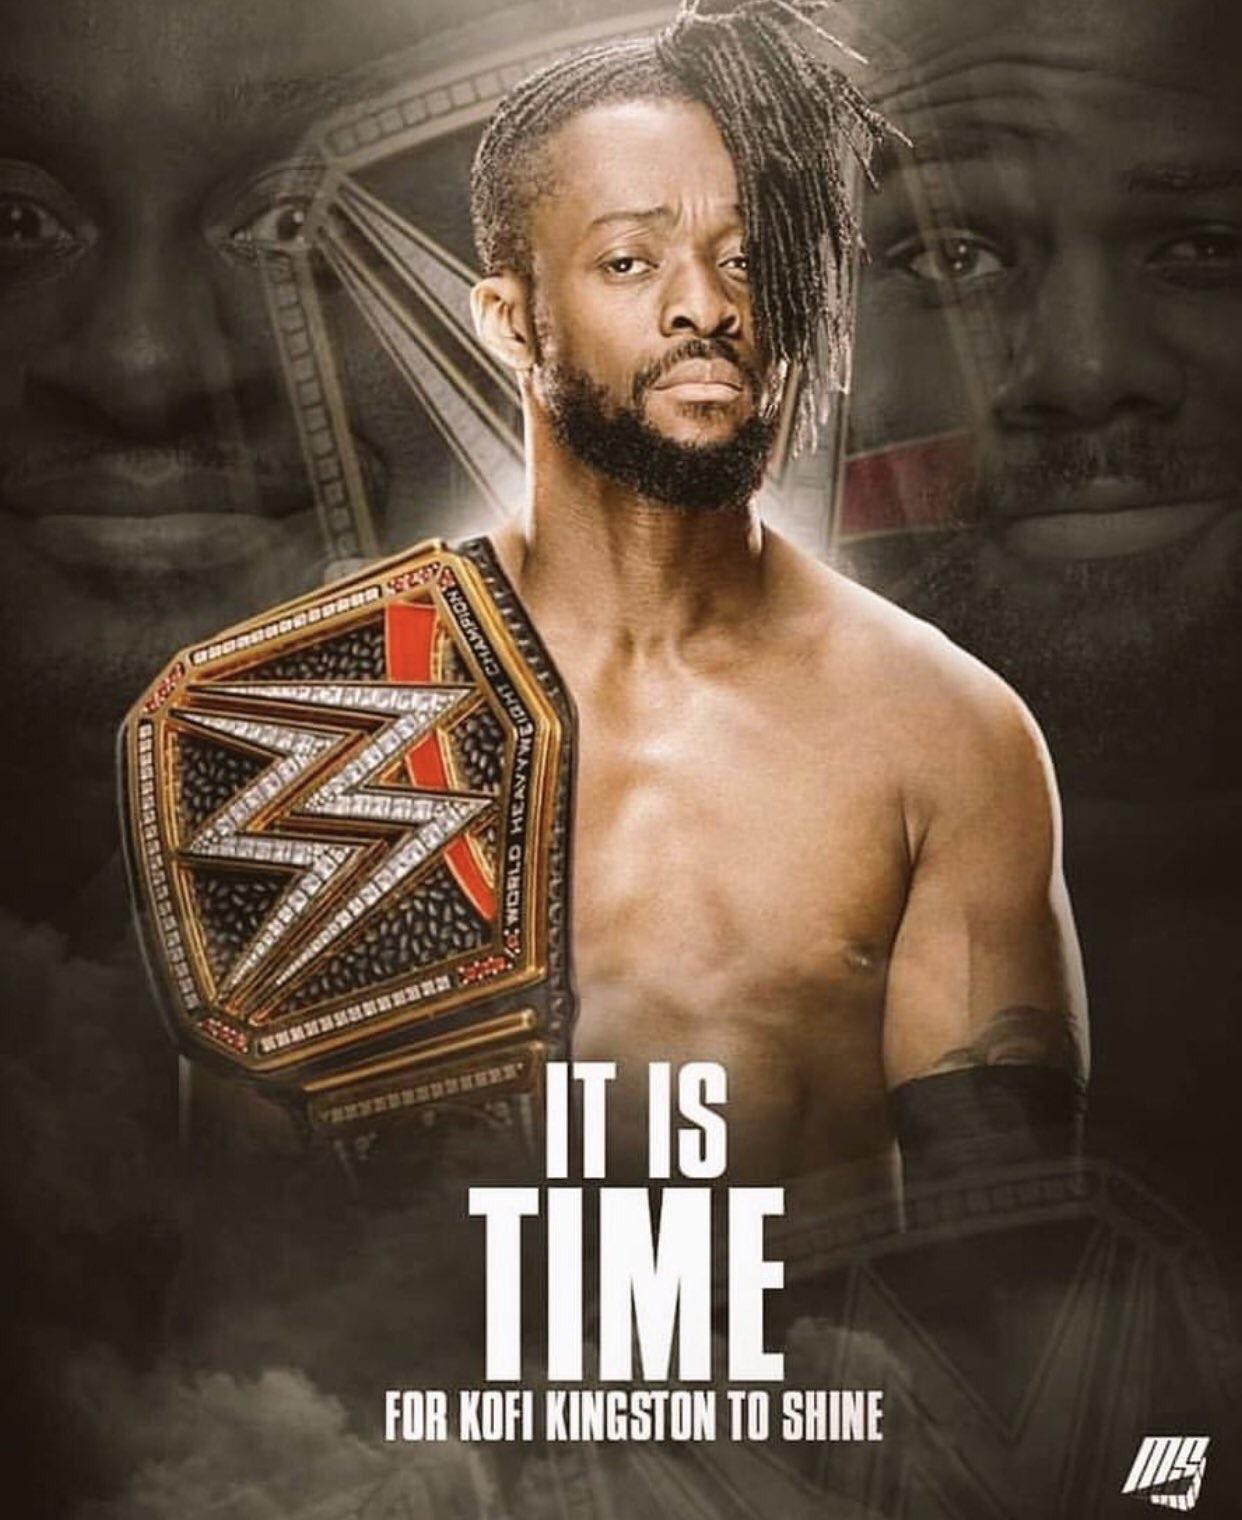 Poster of Kofi Kingston as WWE Champion